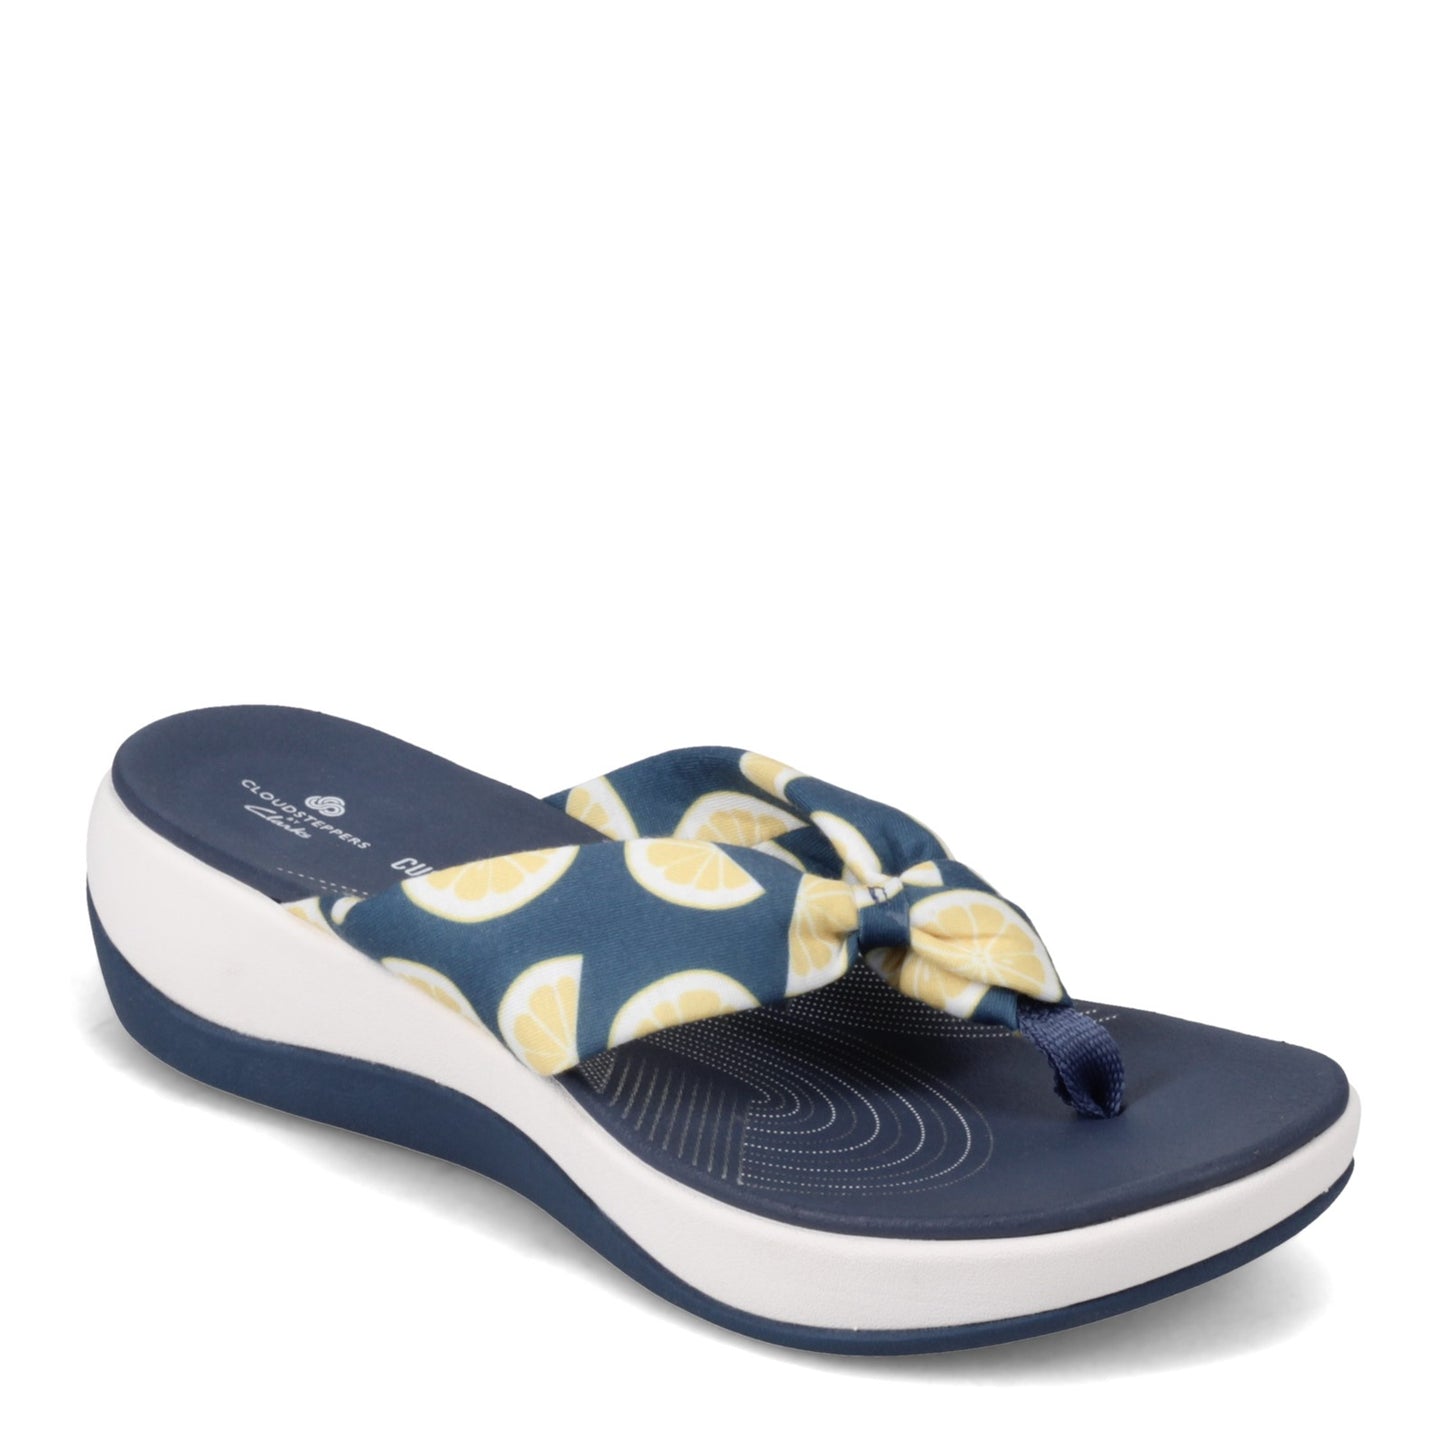 Peltz Shoes  Women's Clarks Arla Glison Sandal BLUE YELLOW 26156950